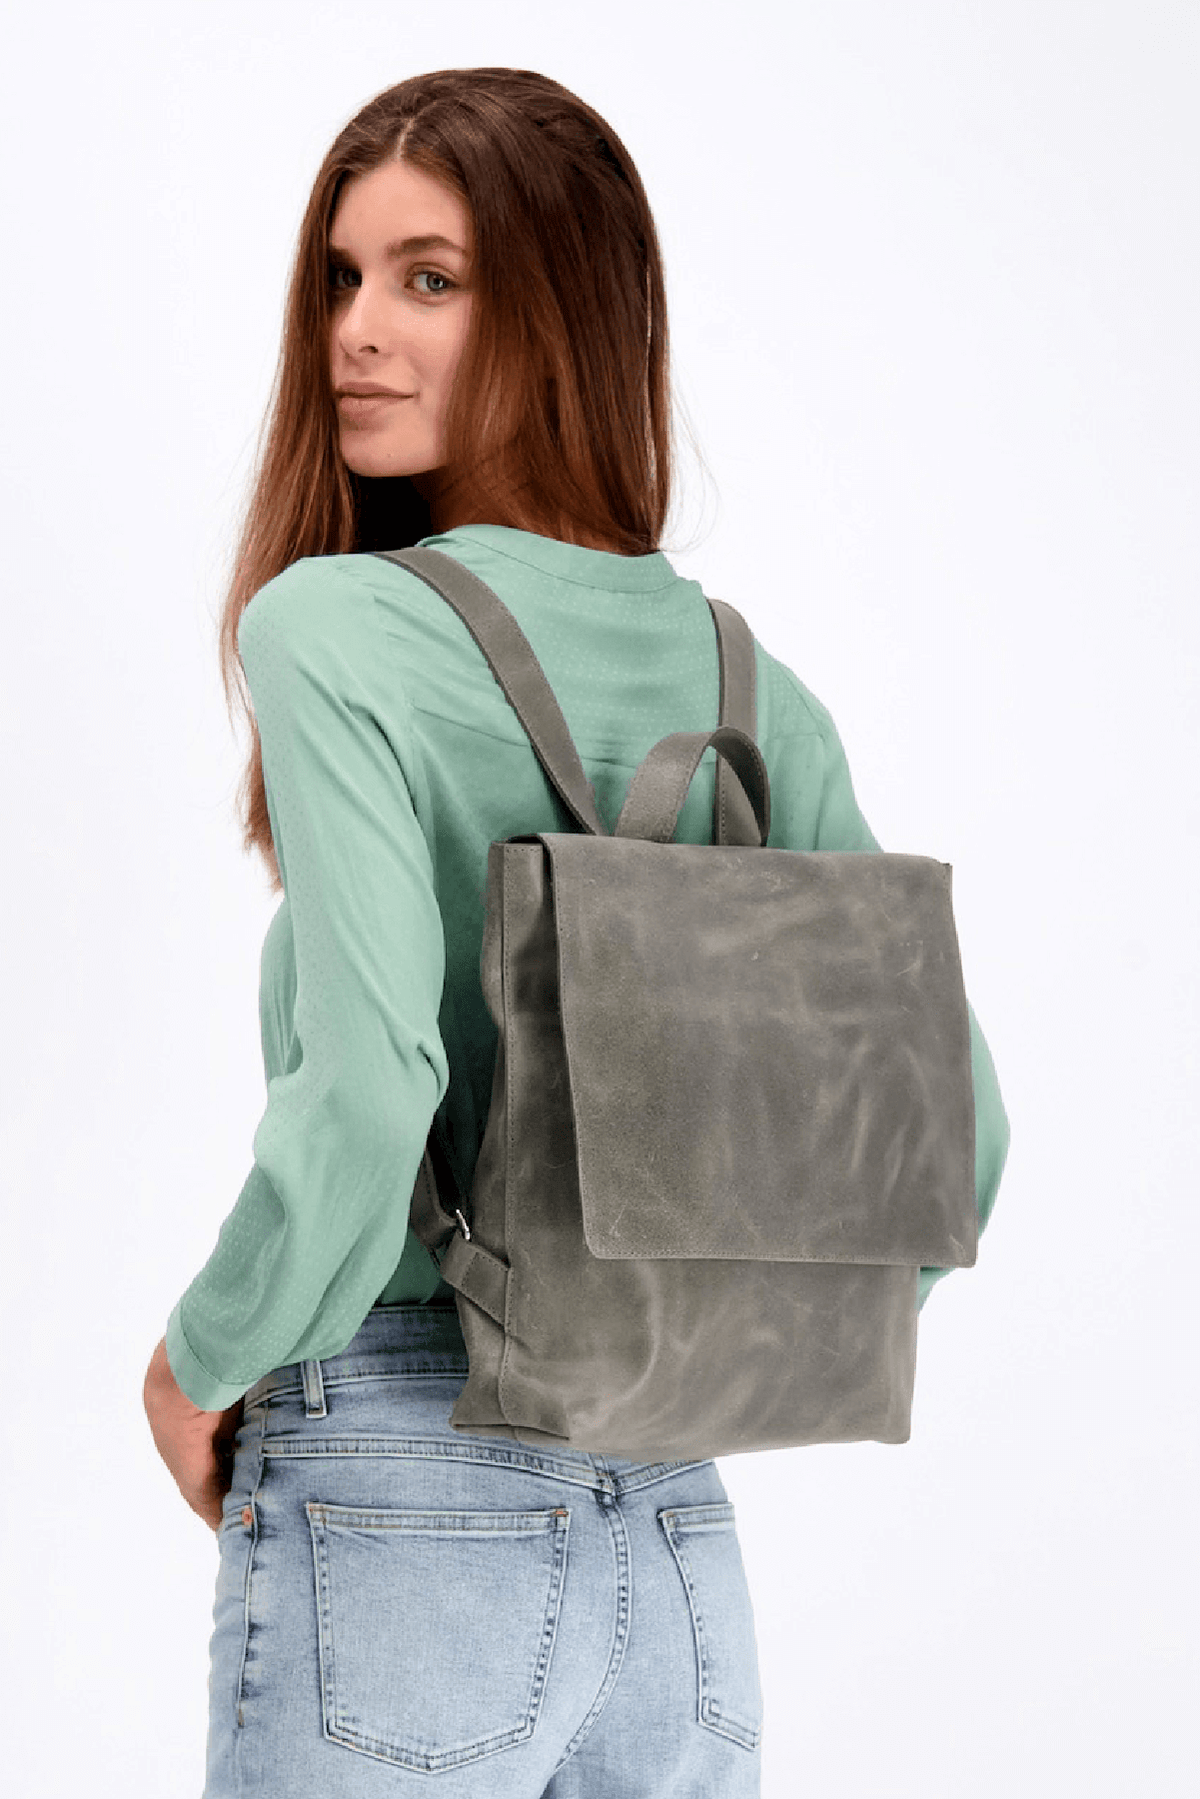 Zency's Genuine Leather Preppy Style Women's Knapsack Backpacks